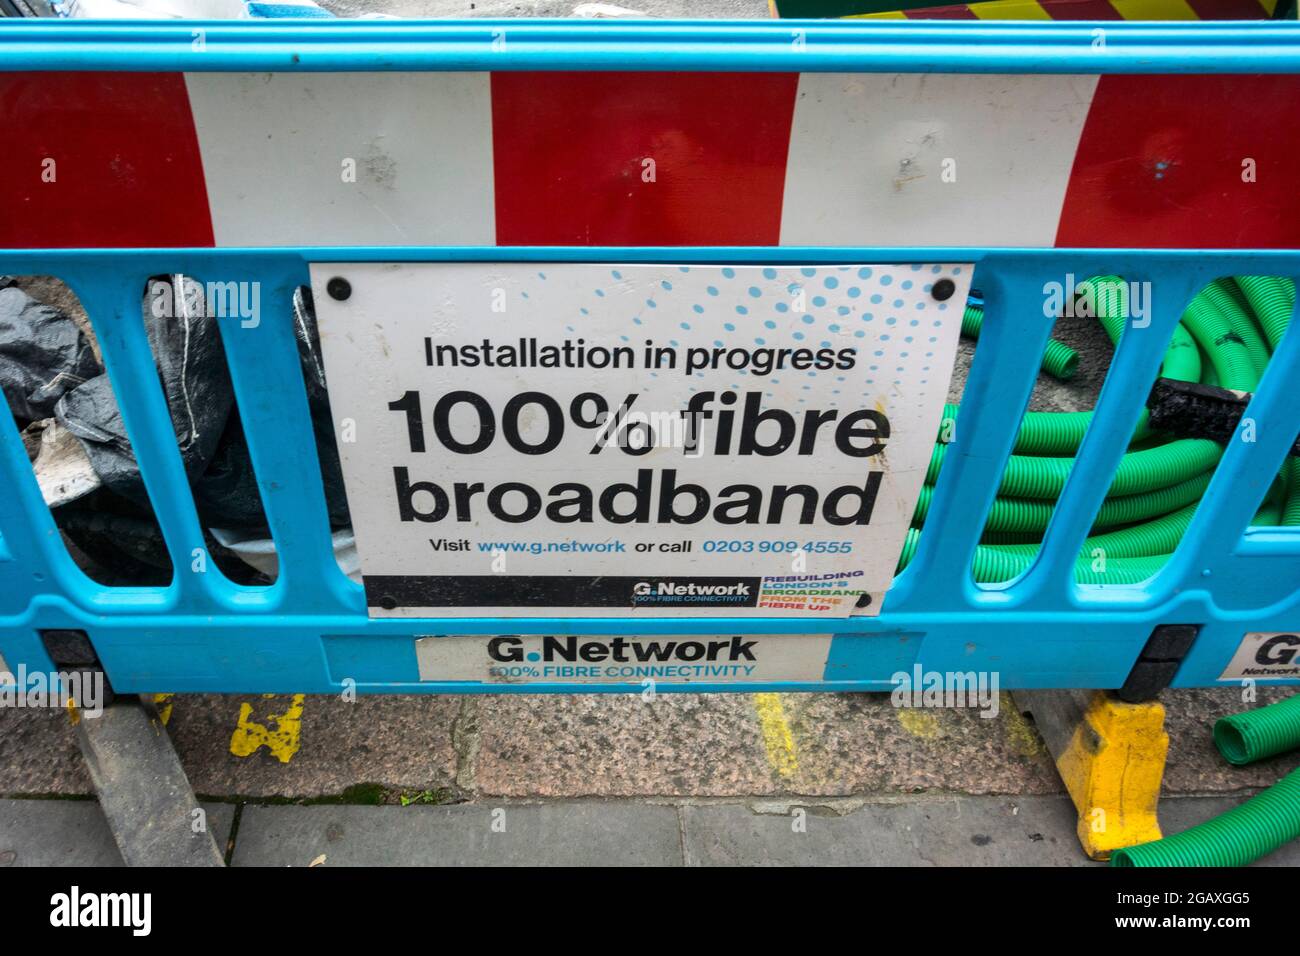 100% fibre broadband installation sign, London Stock Photo